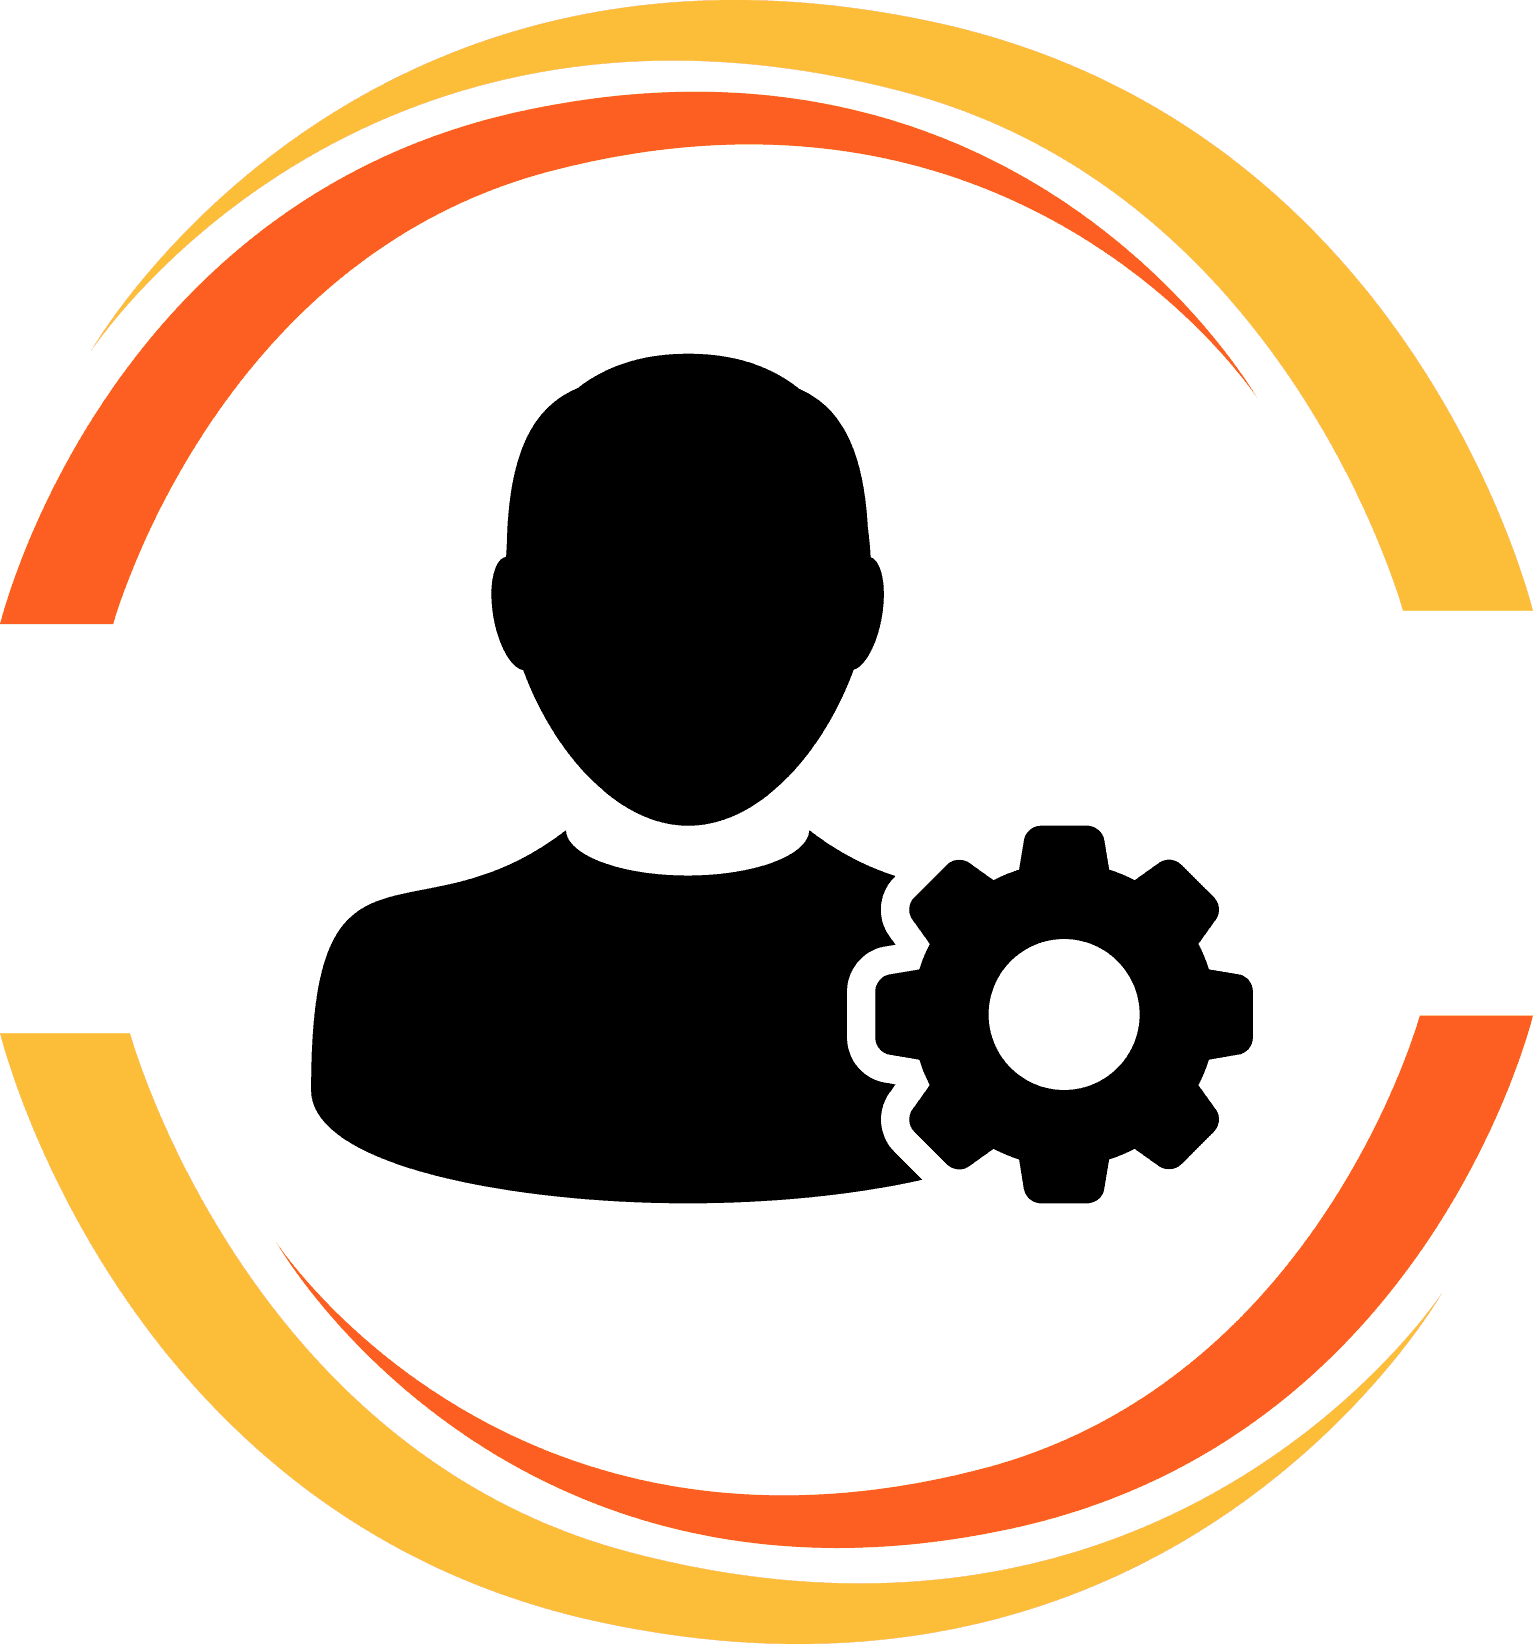 A Yellow And Orange Circle